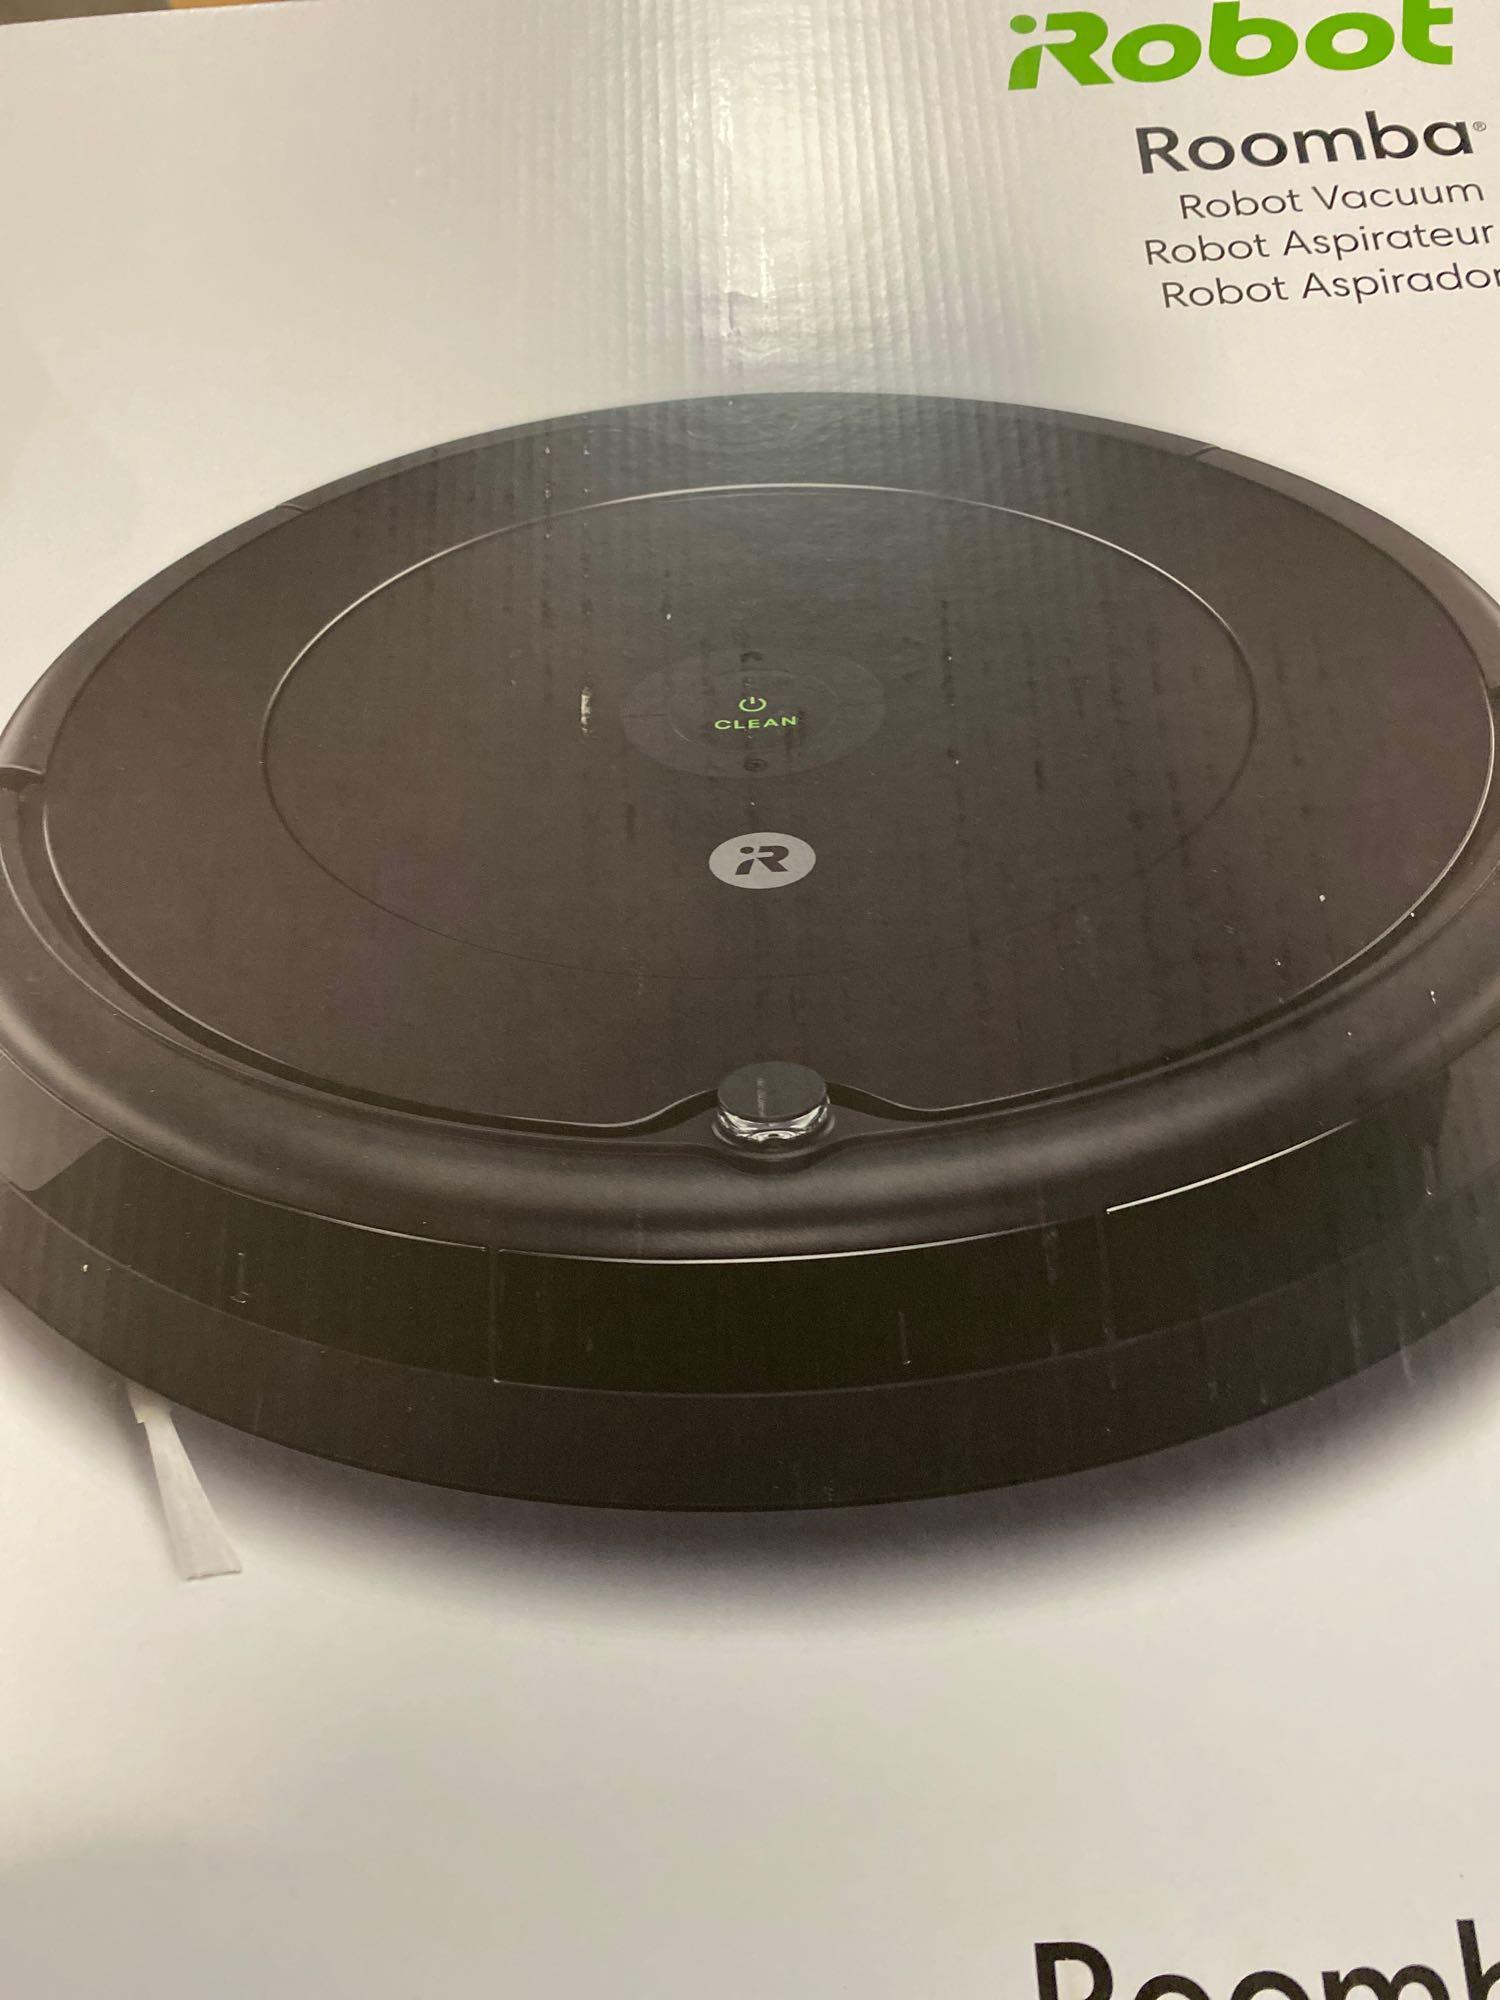 iRobot Roomba 692 Robot Vacuum, Works with Alexa-Wi-Fi Connectivity